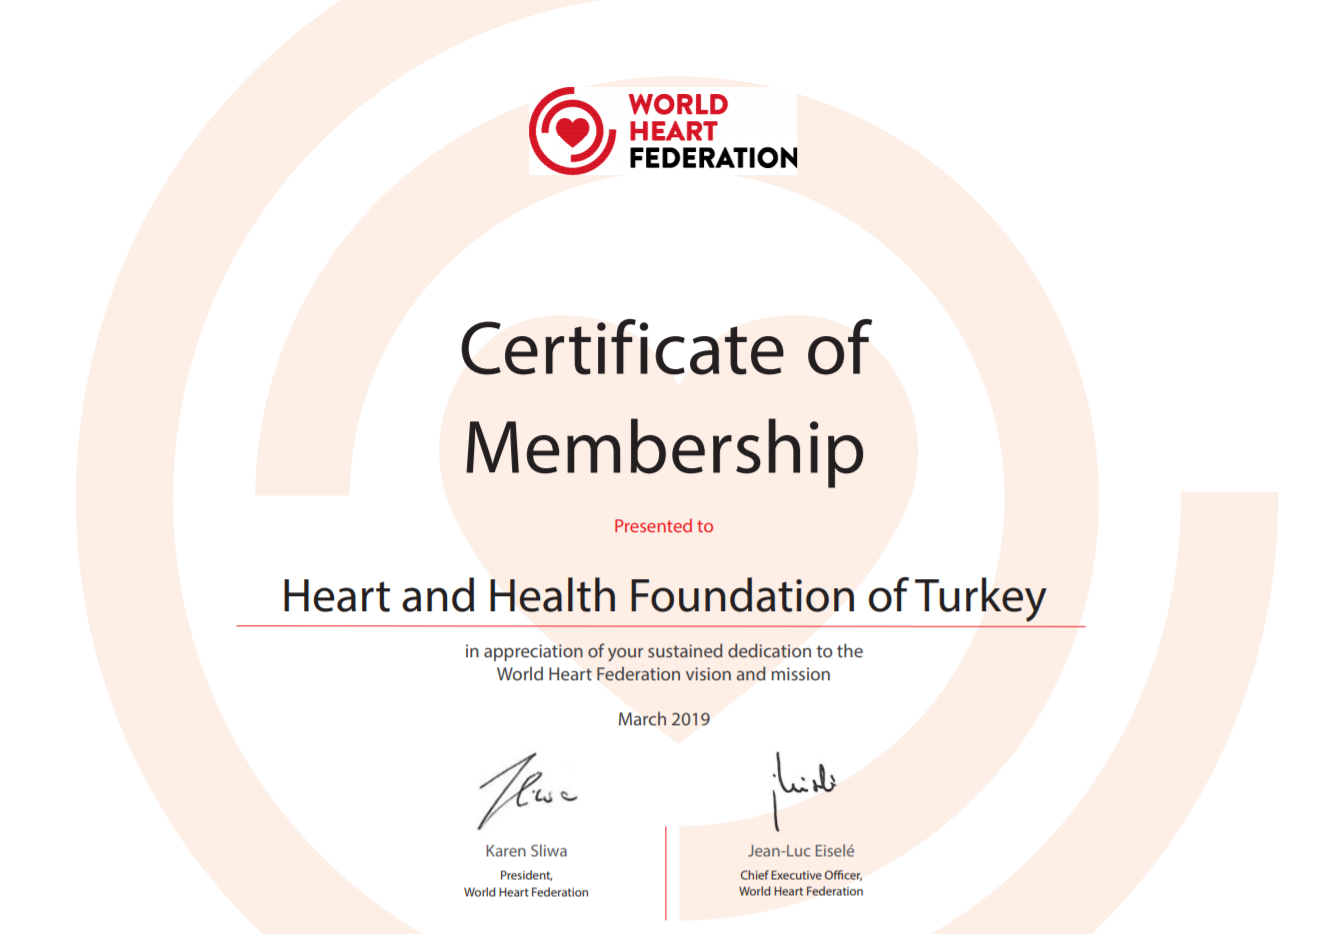 TKSV - Heart and Health Foundation of Turkey